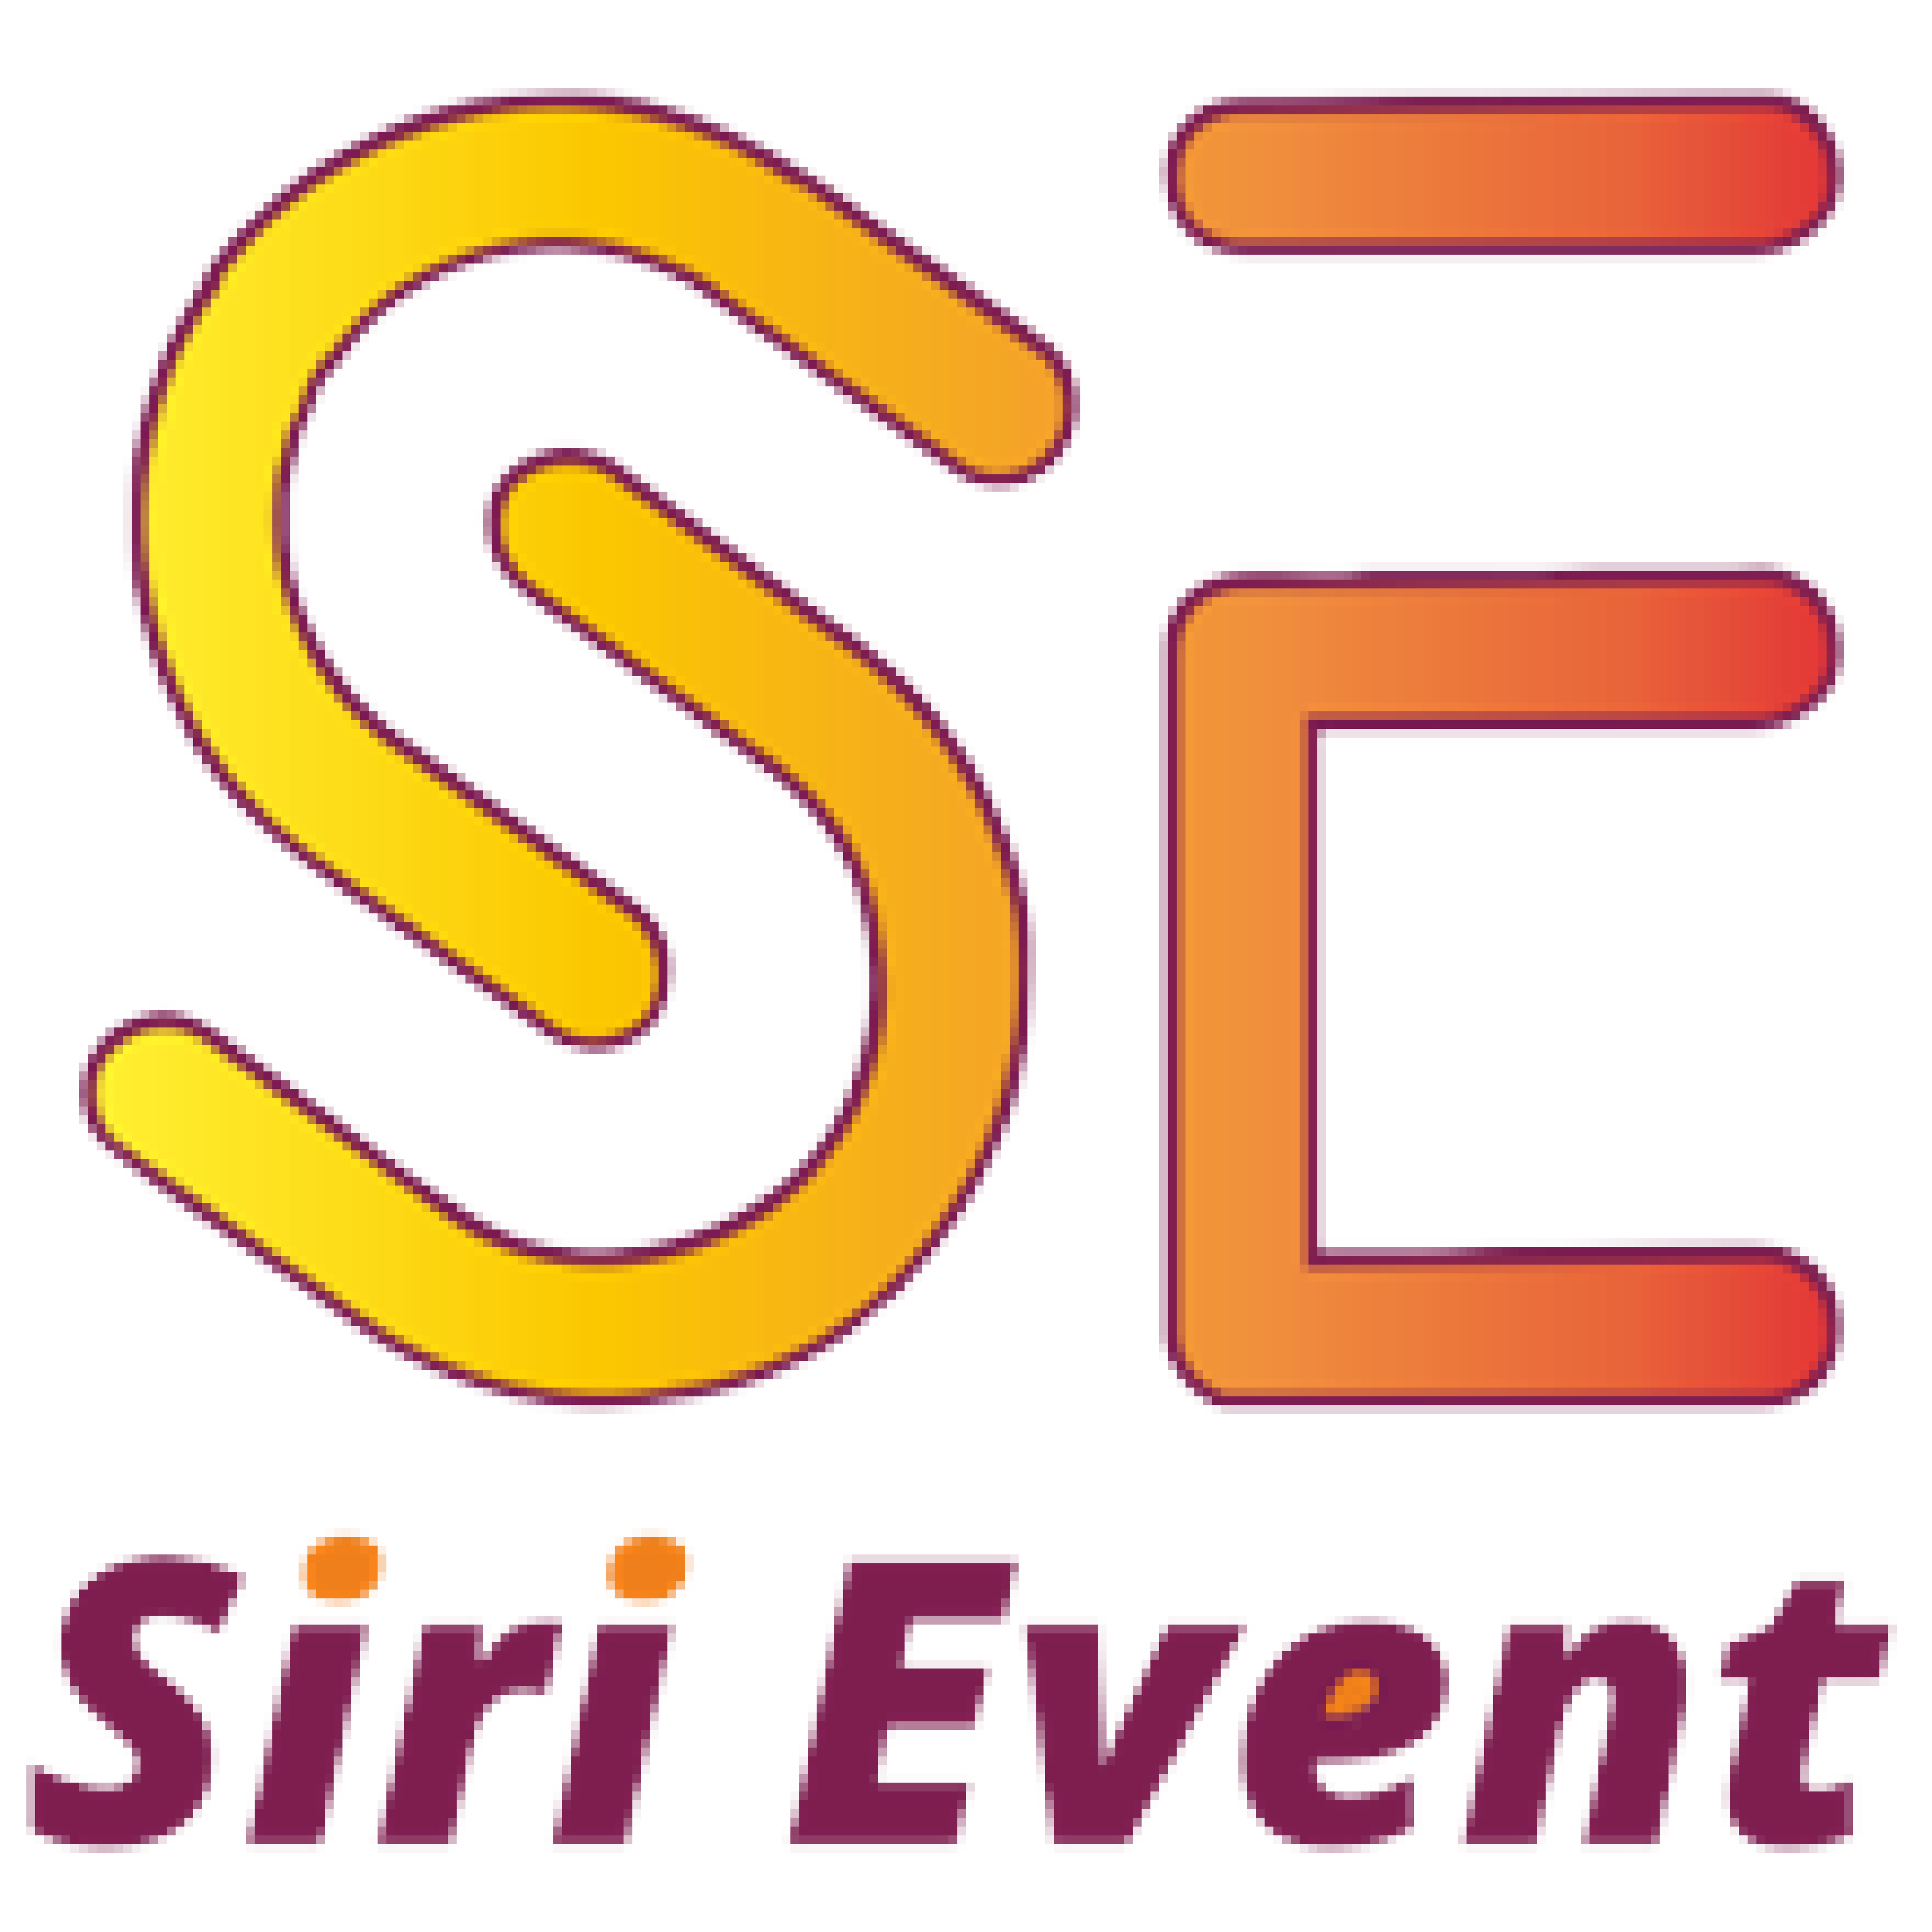 siri_event-removebg-preview